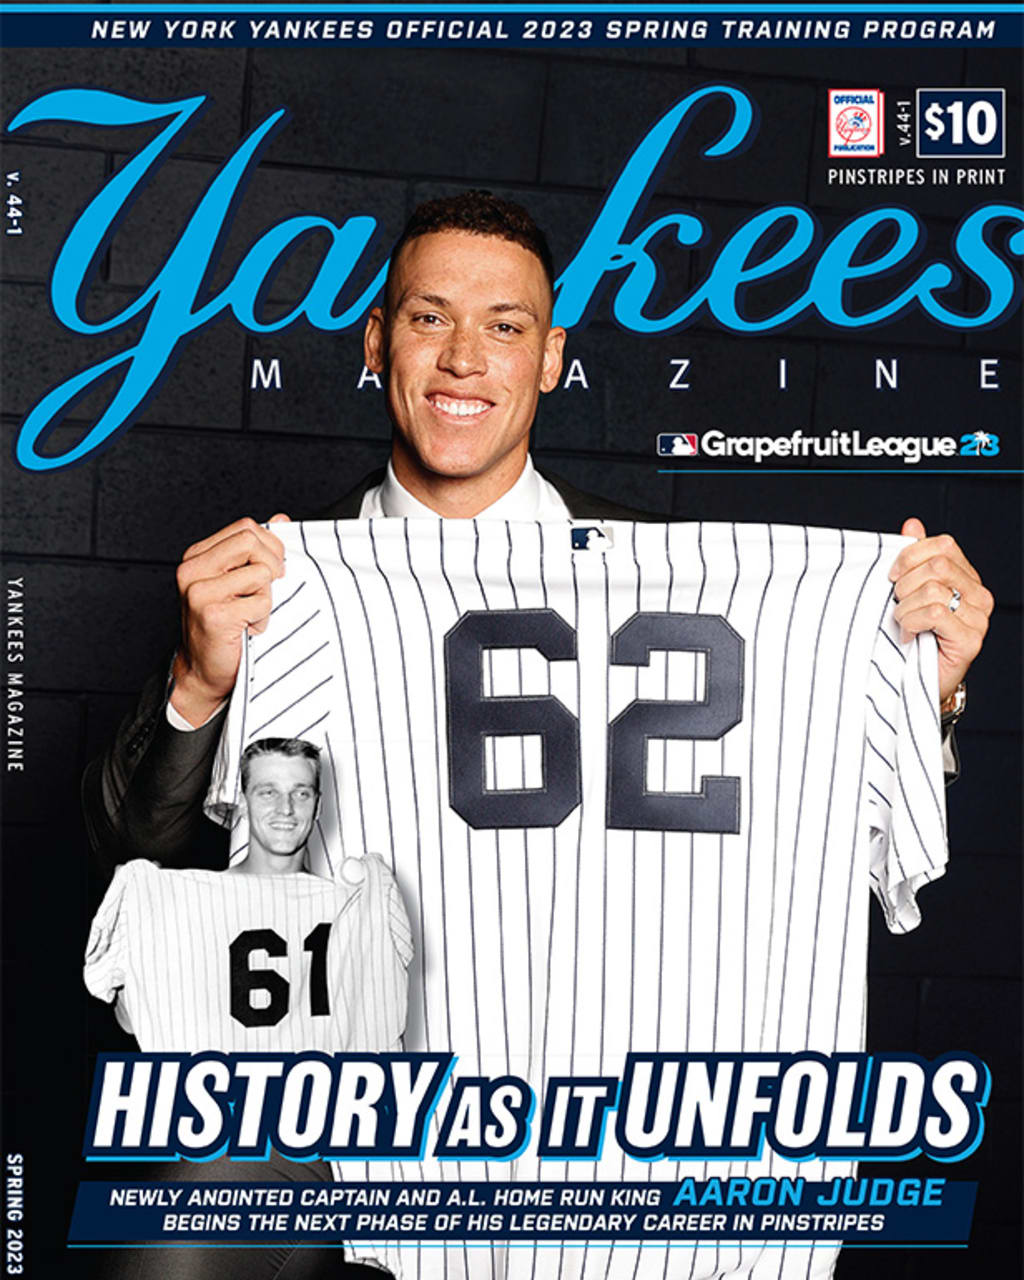 Publications New York Yankees